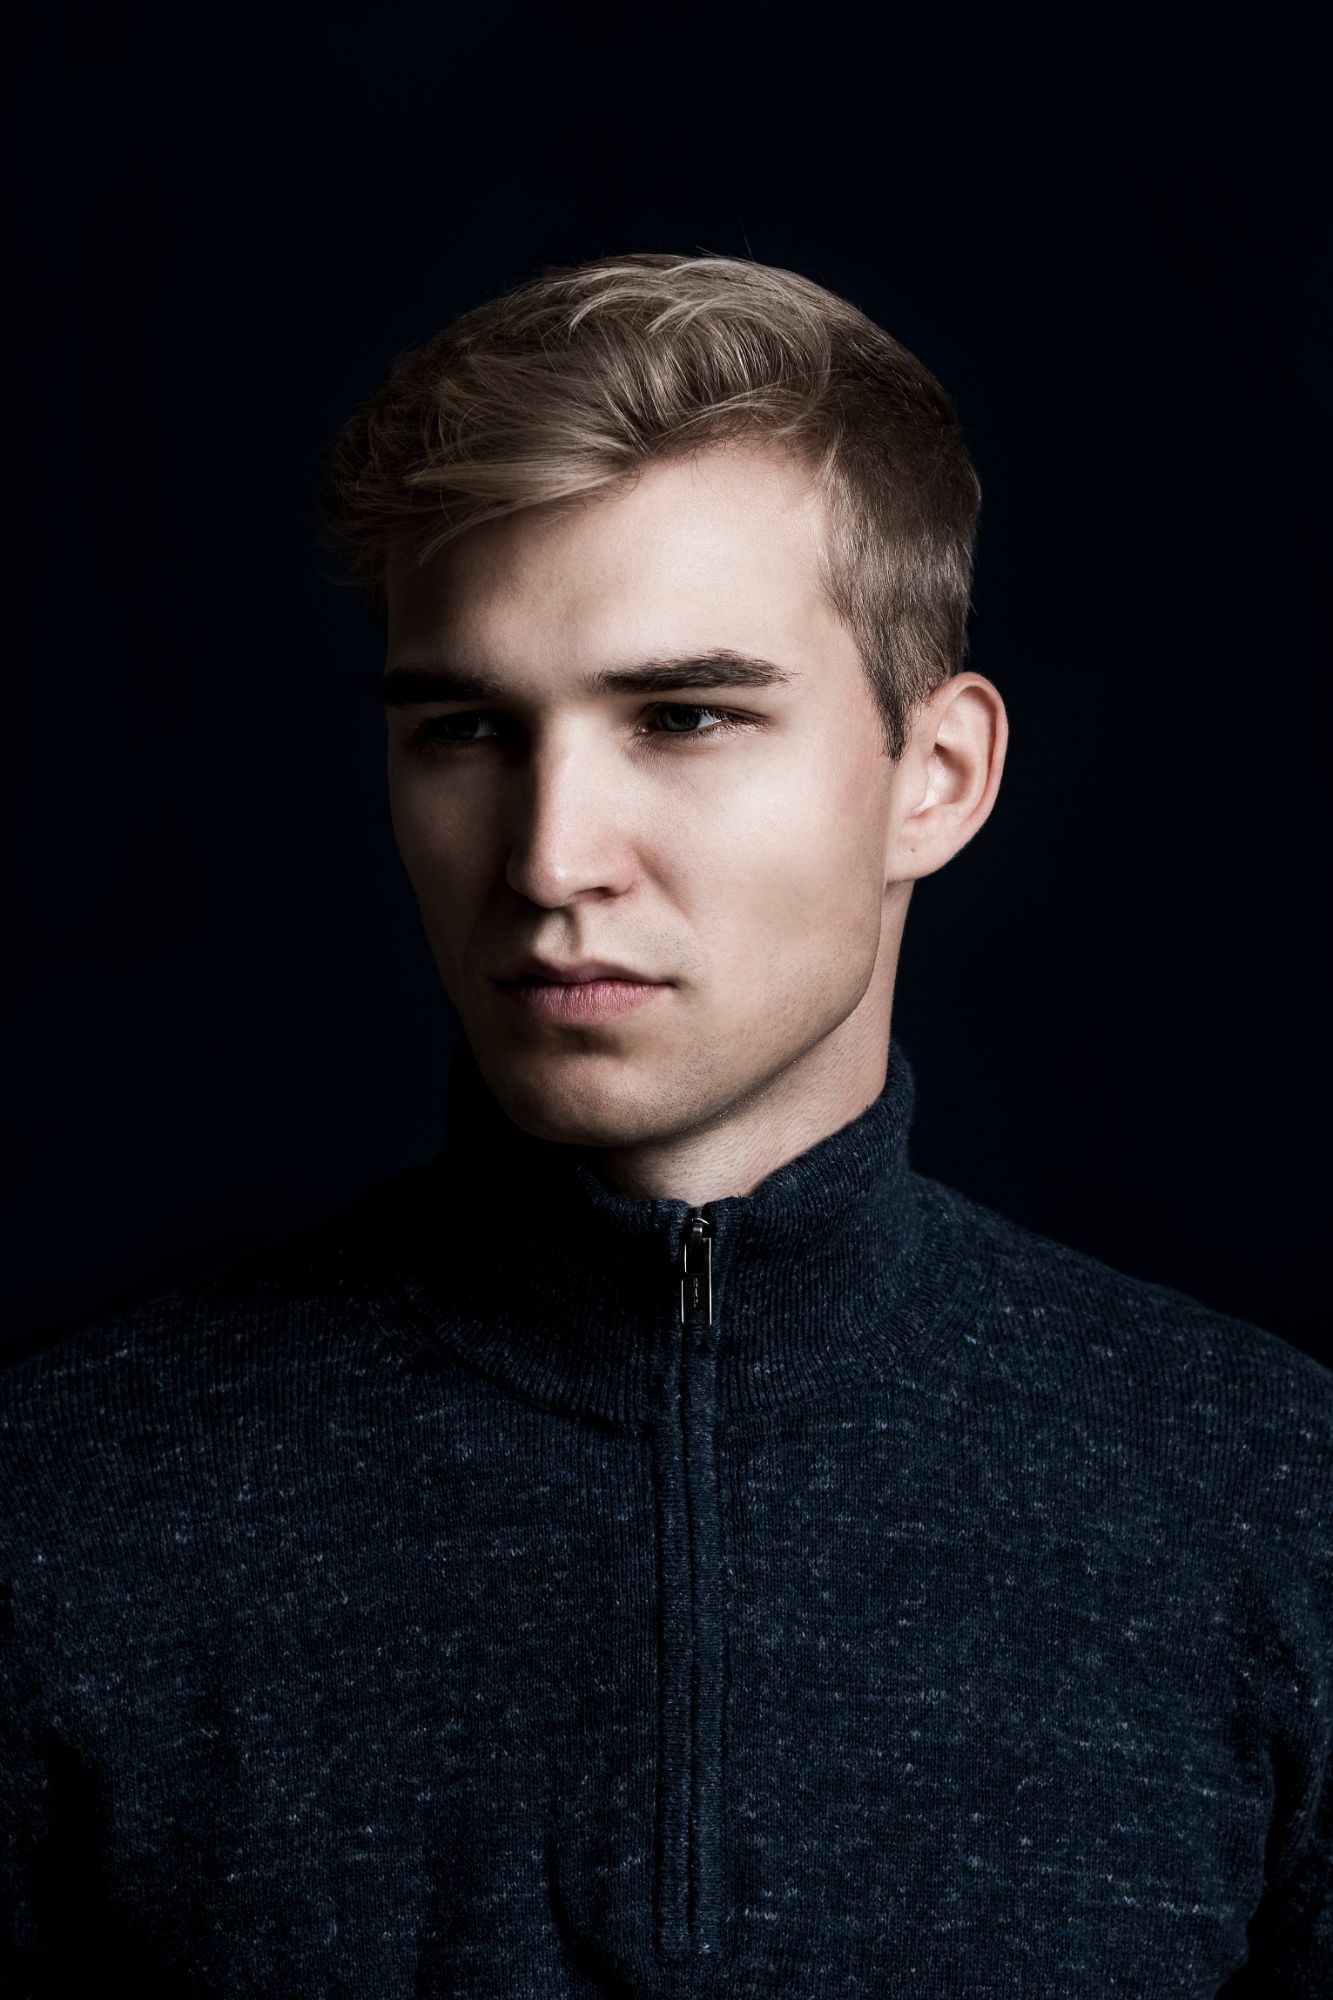 guy; model portrait on dark background